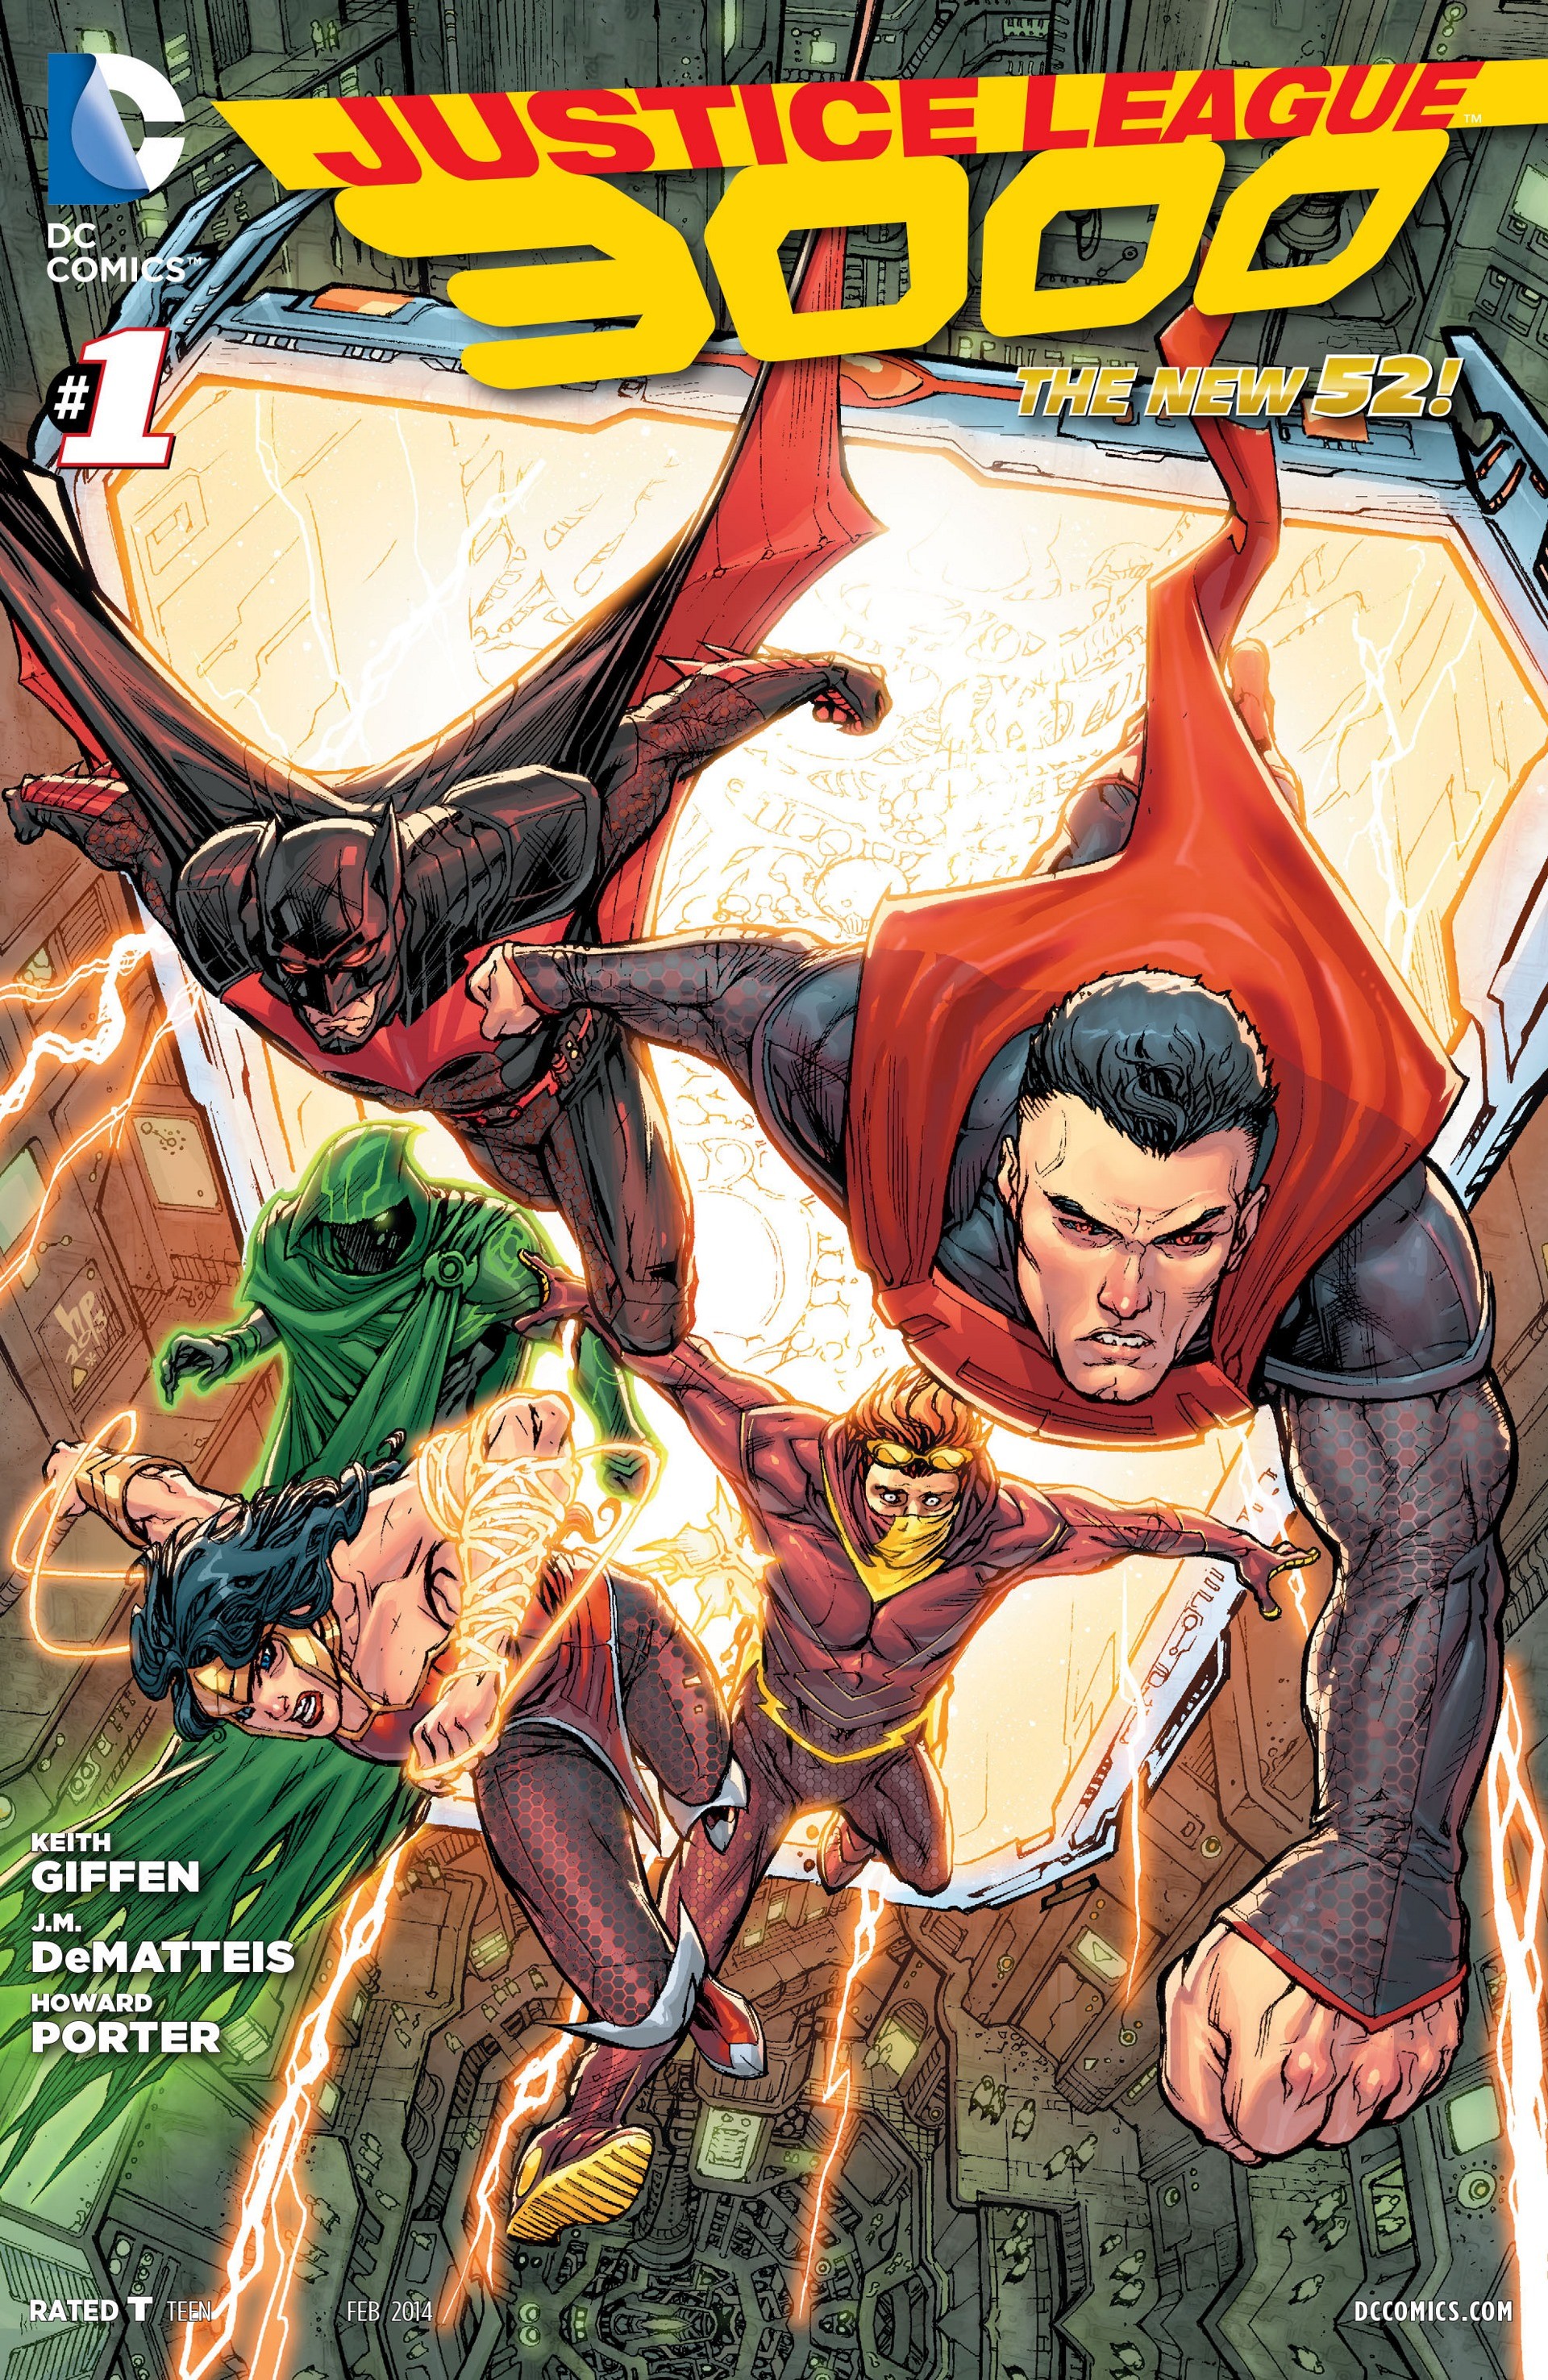 Justice League 3000 Vol. 1 #1